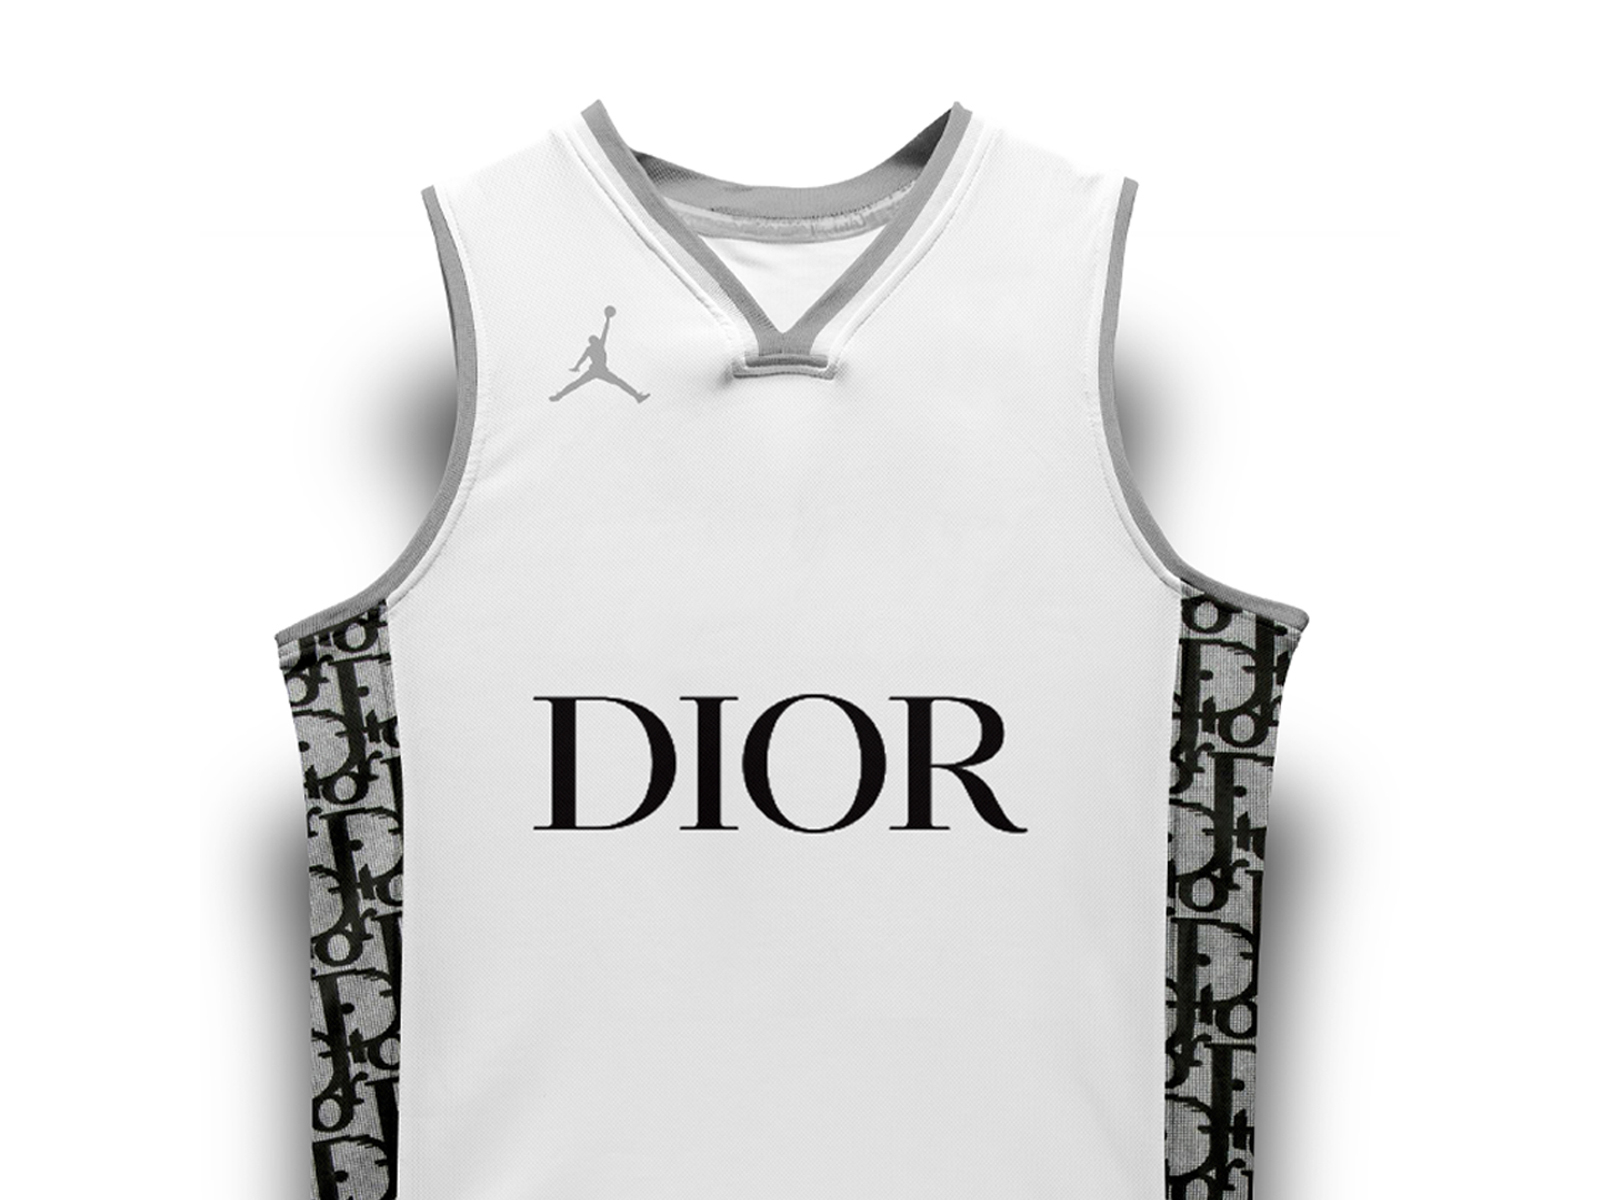 Jordan X Dior | Jersey Concept by 